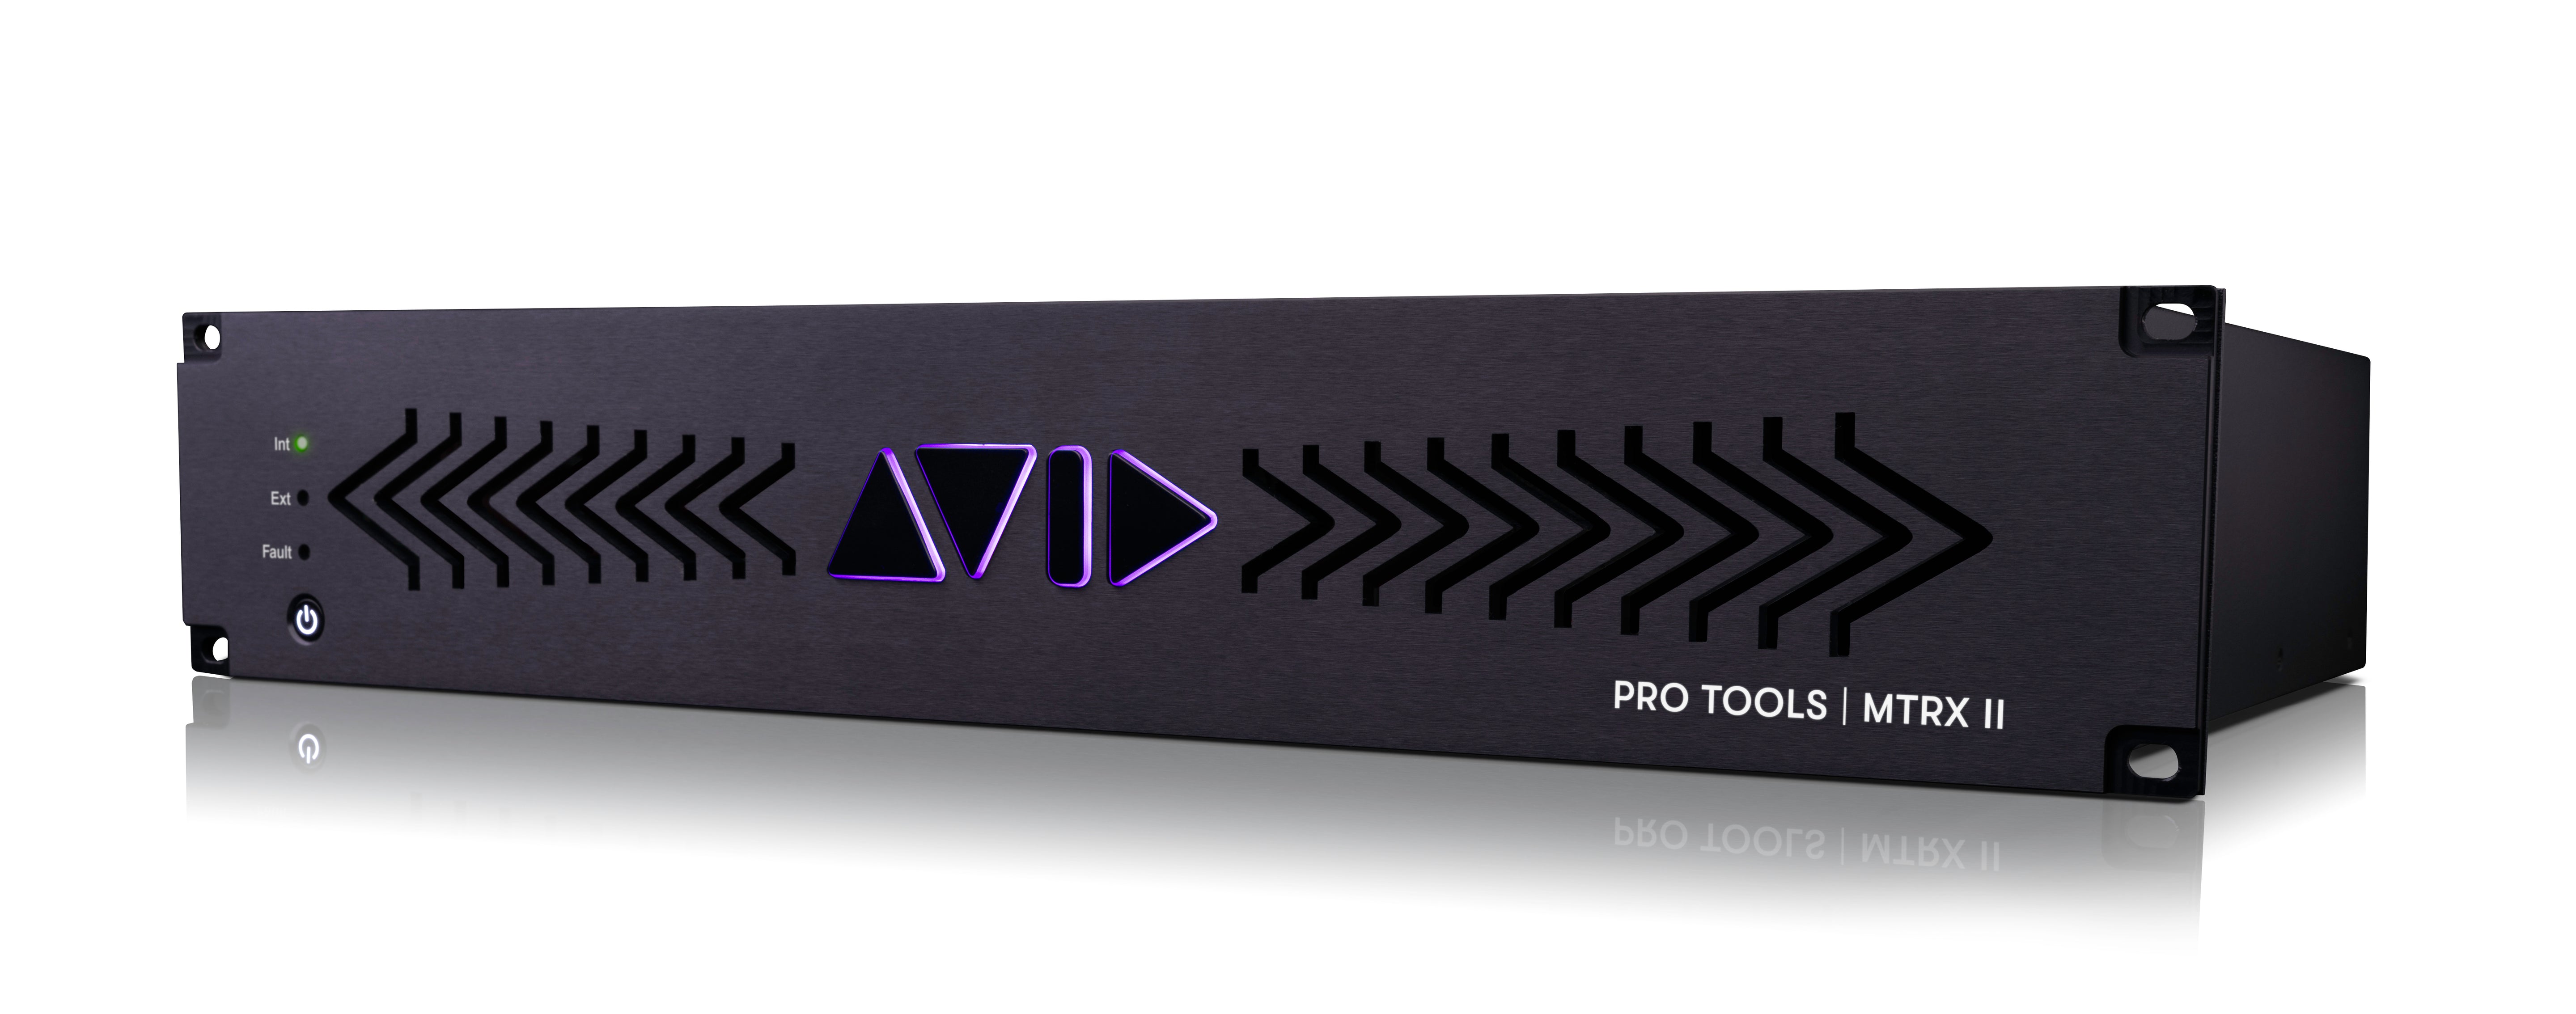 Avid Pro Tools | MTRX II Base unit with DigiLink, Dante 256 and SPQ